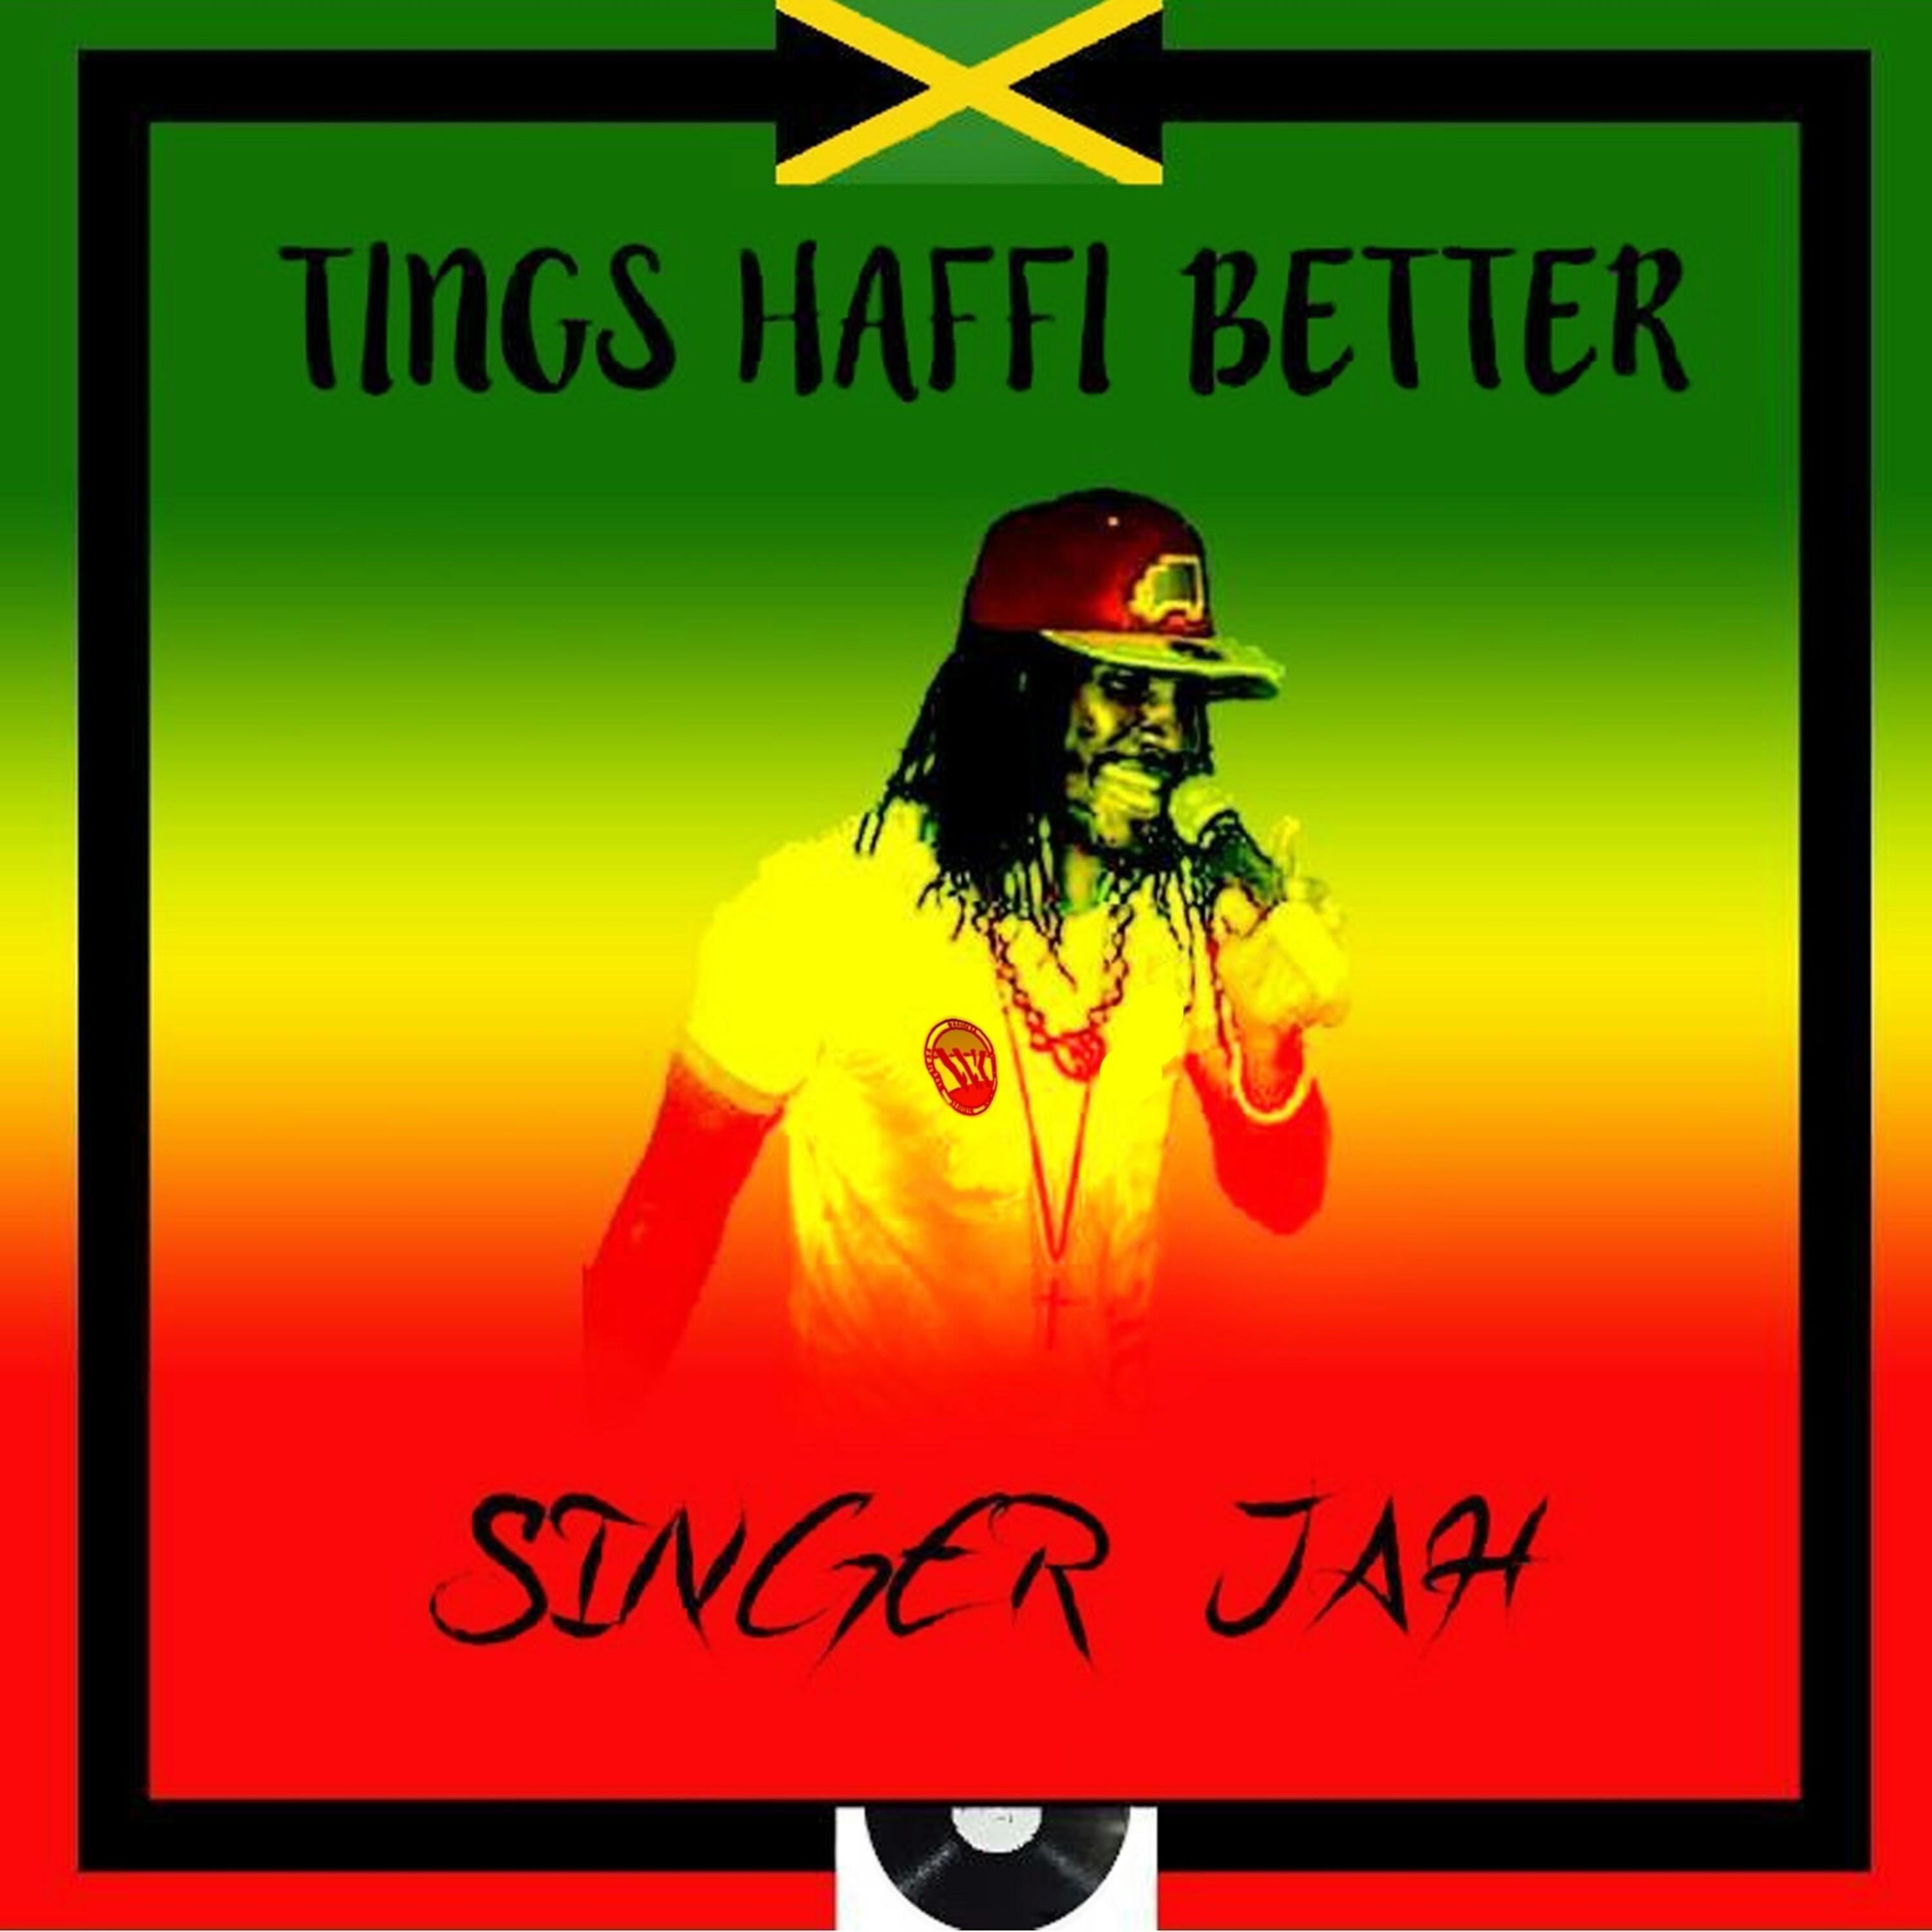 Singer Jah - I've Got to Tell You